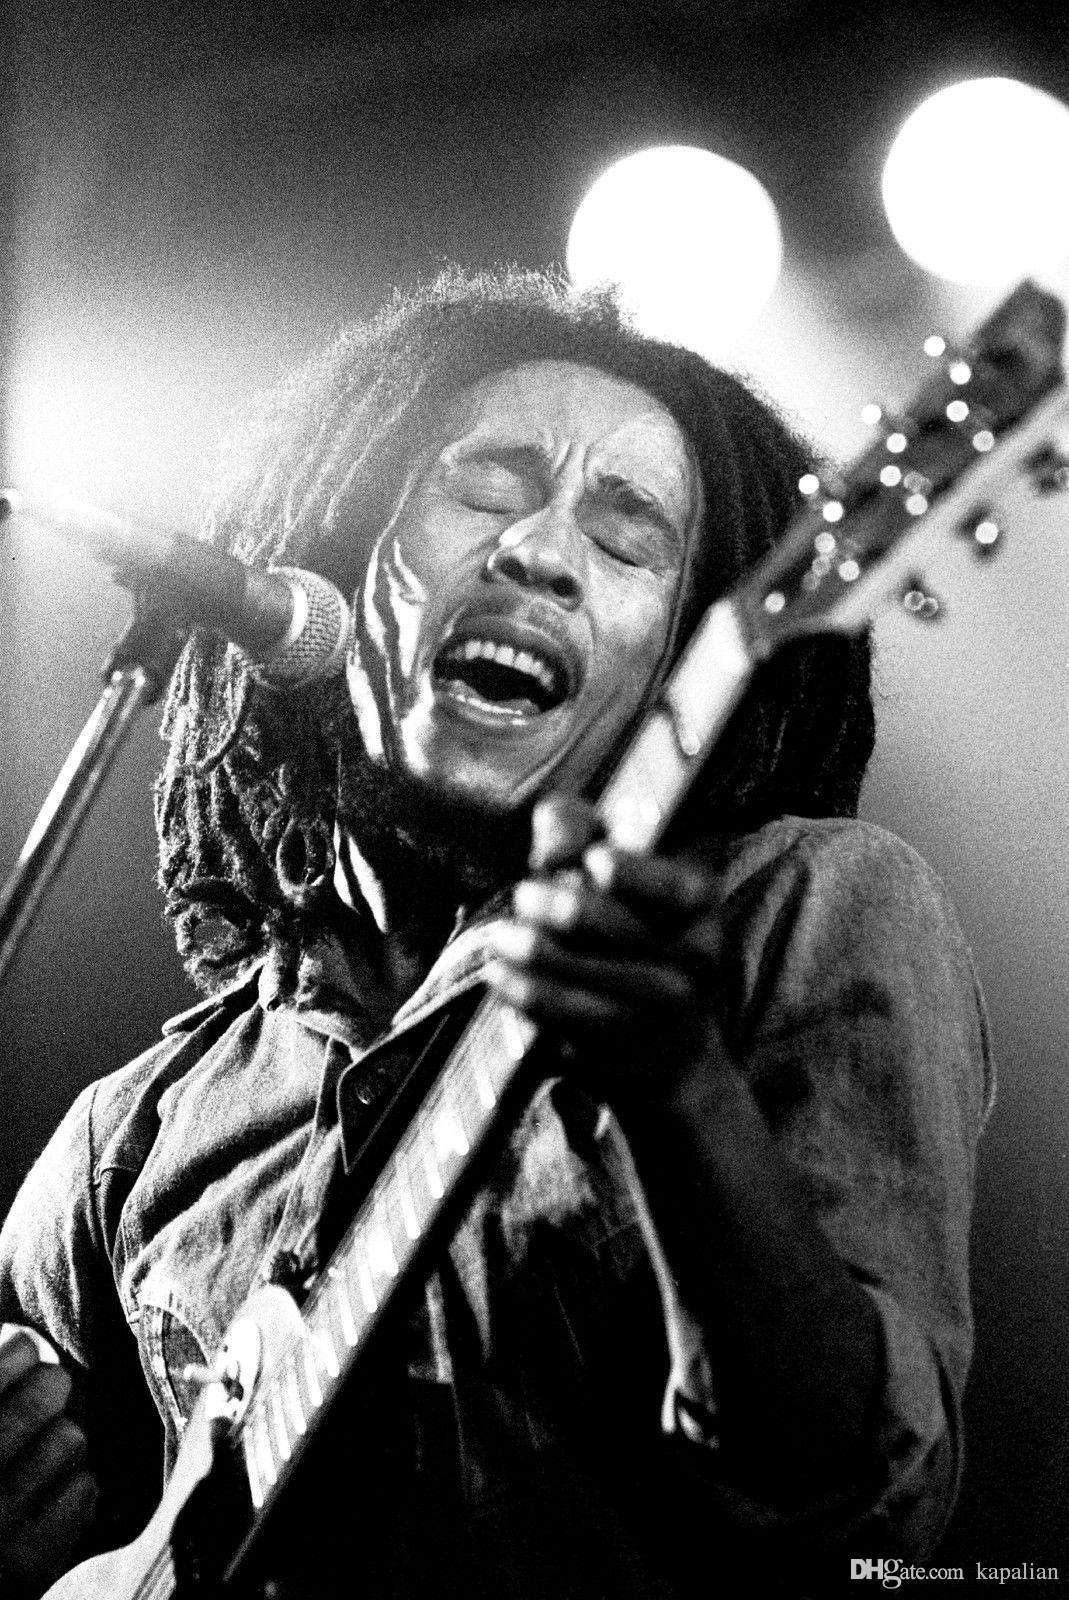 Bob Marley Black and White Logo - 2019 Bob Marley Black White Play Guitar Art Posters Print Photopaper ...